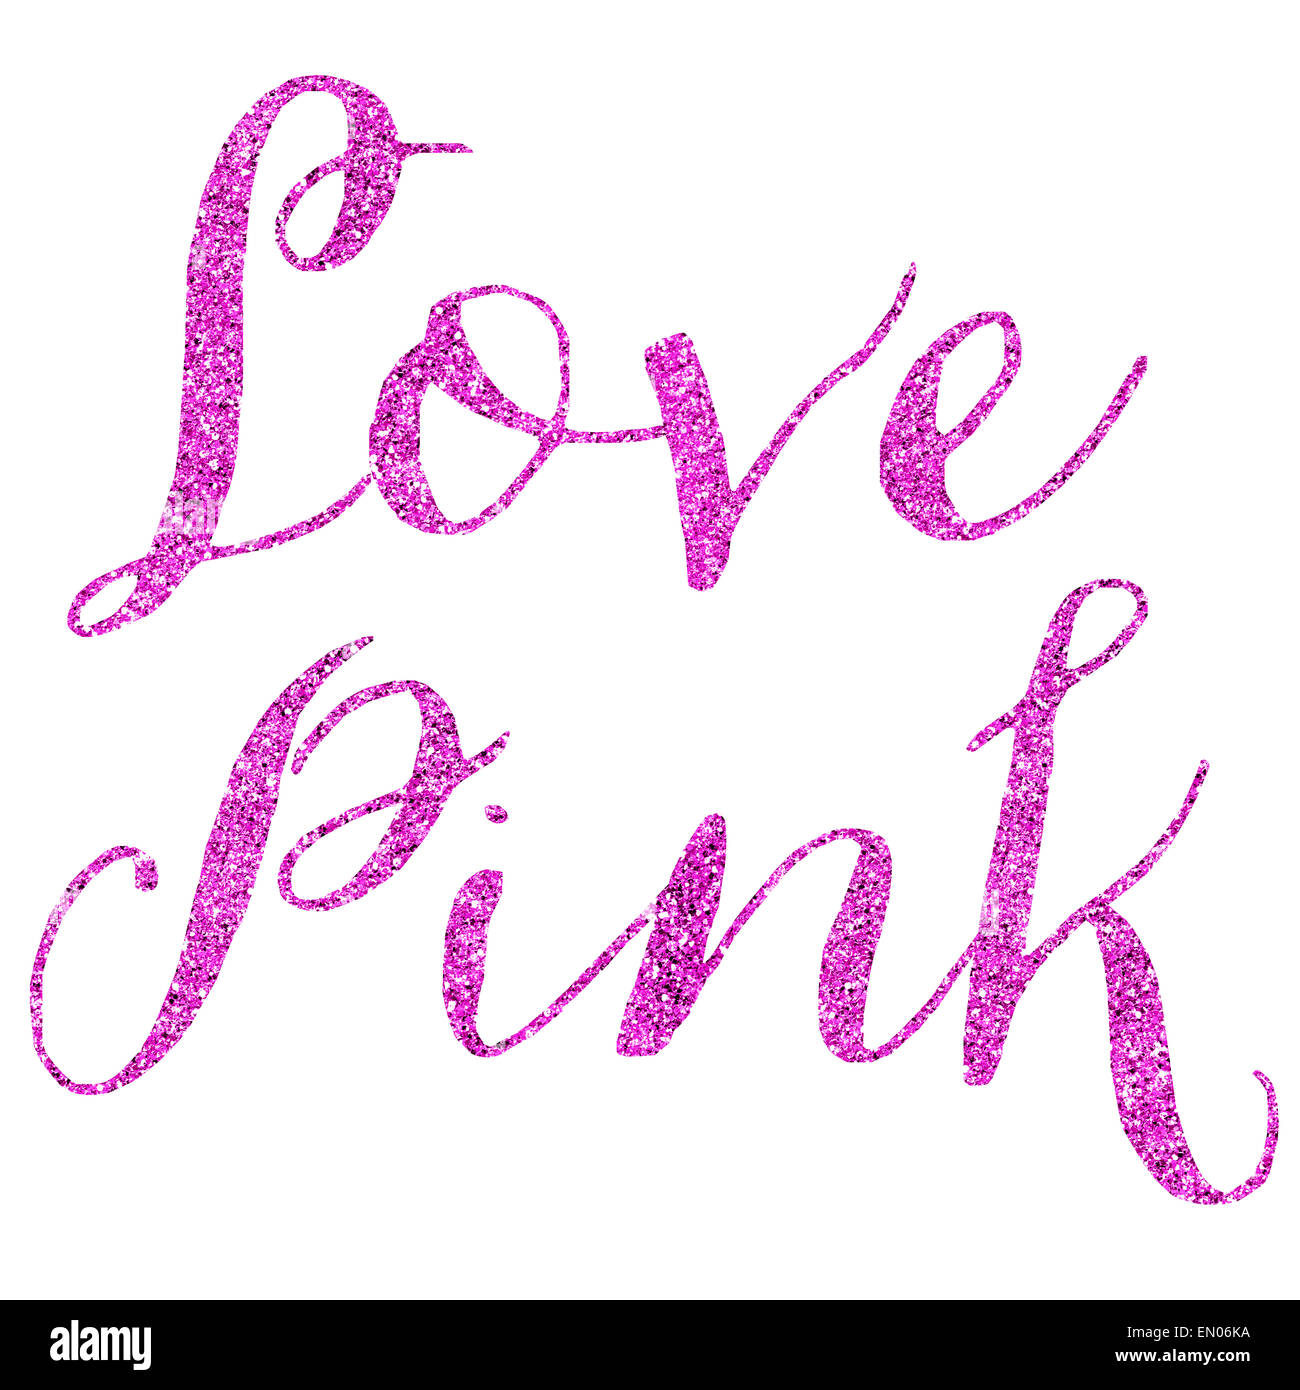 Glitzernde Liebe Pink Faux Folie Metallic inspirierend Zitat Isolated on White Background Stockfoto